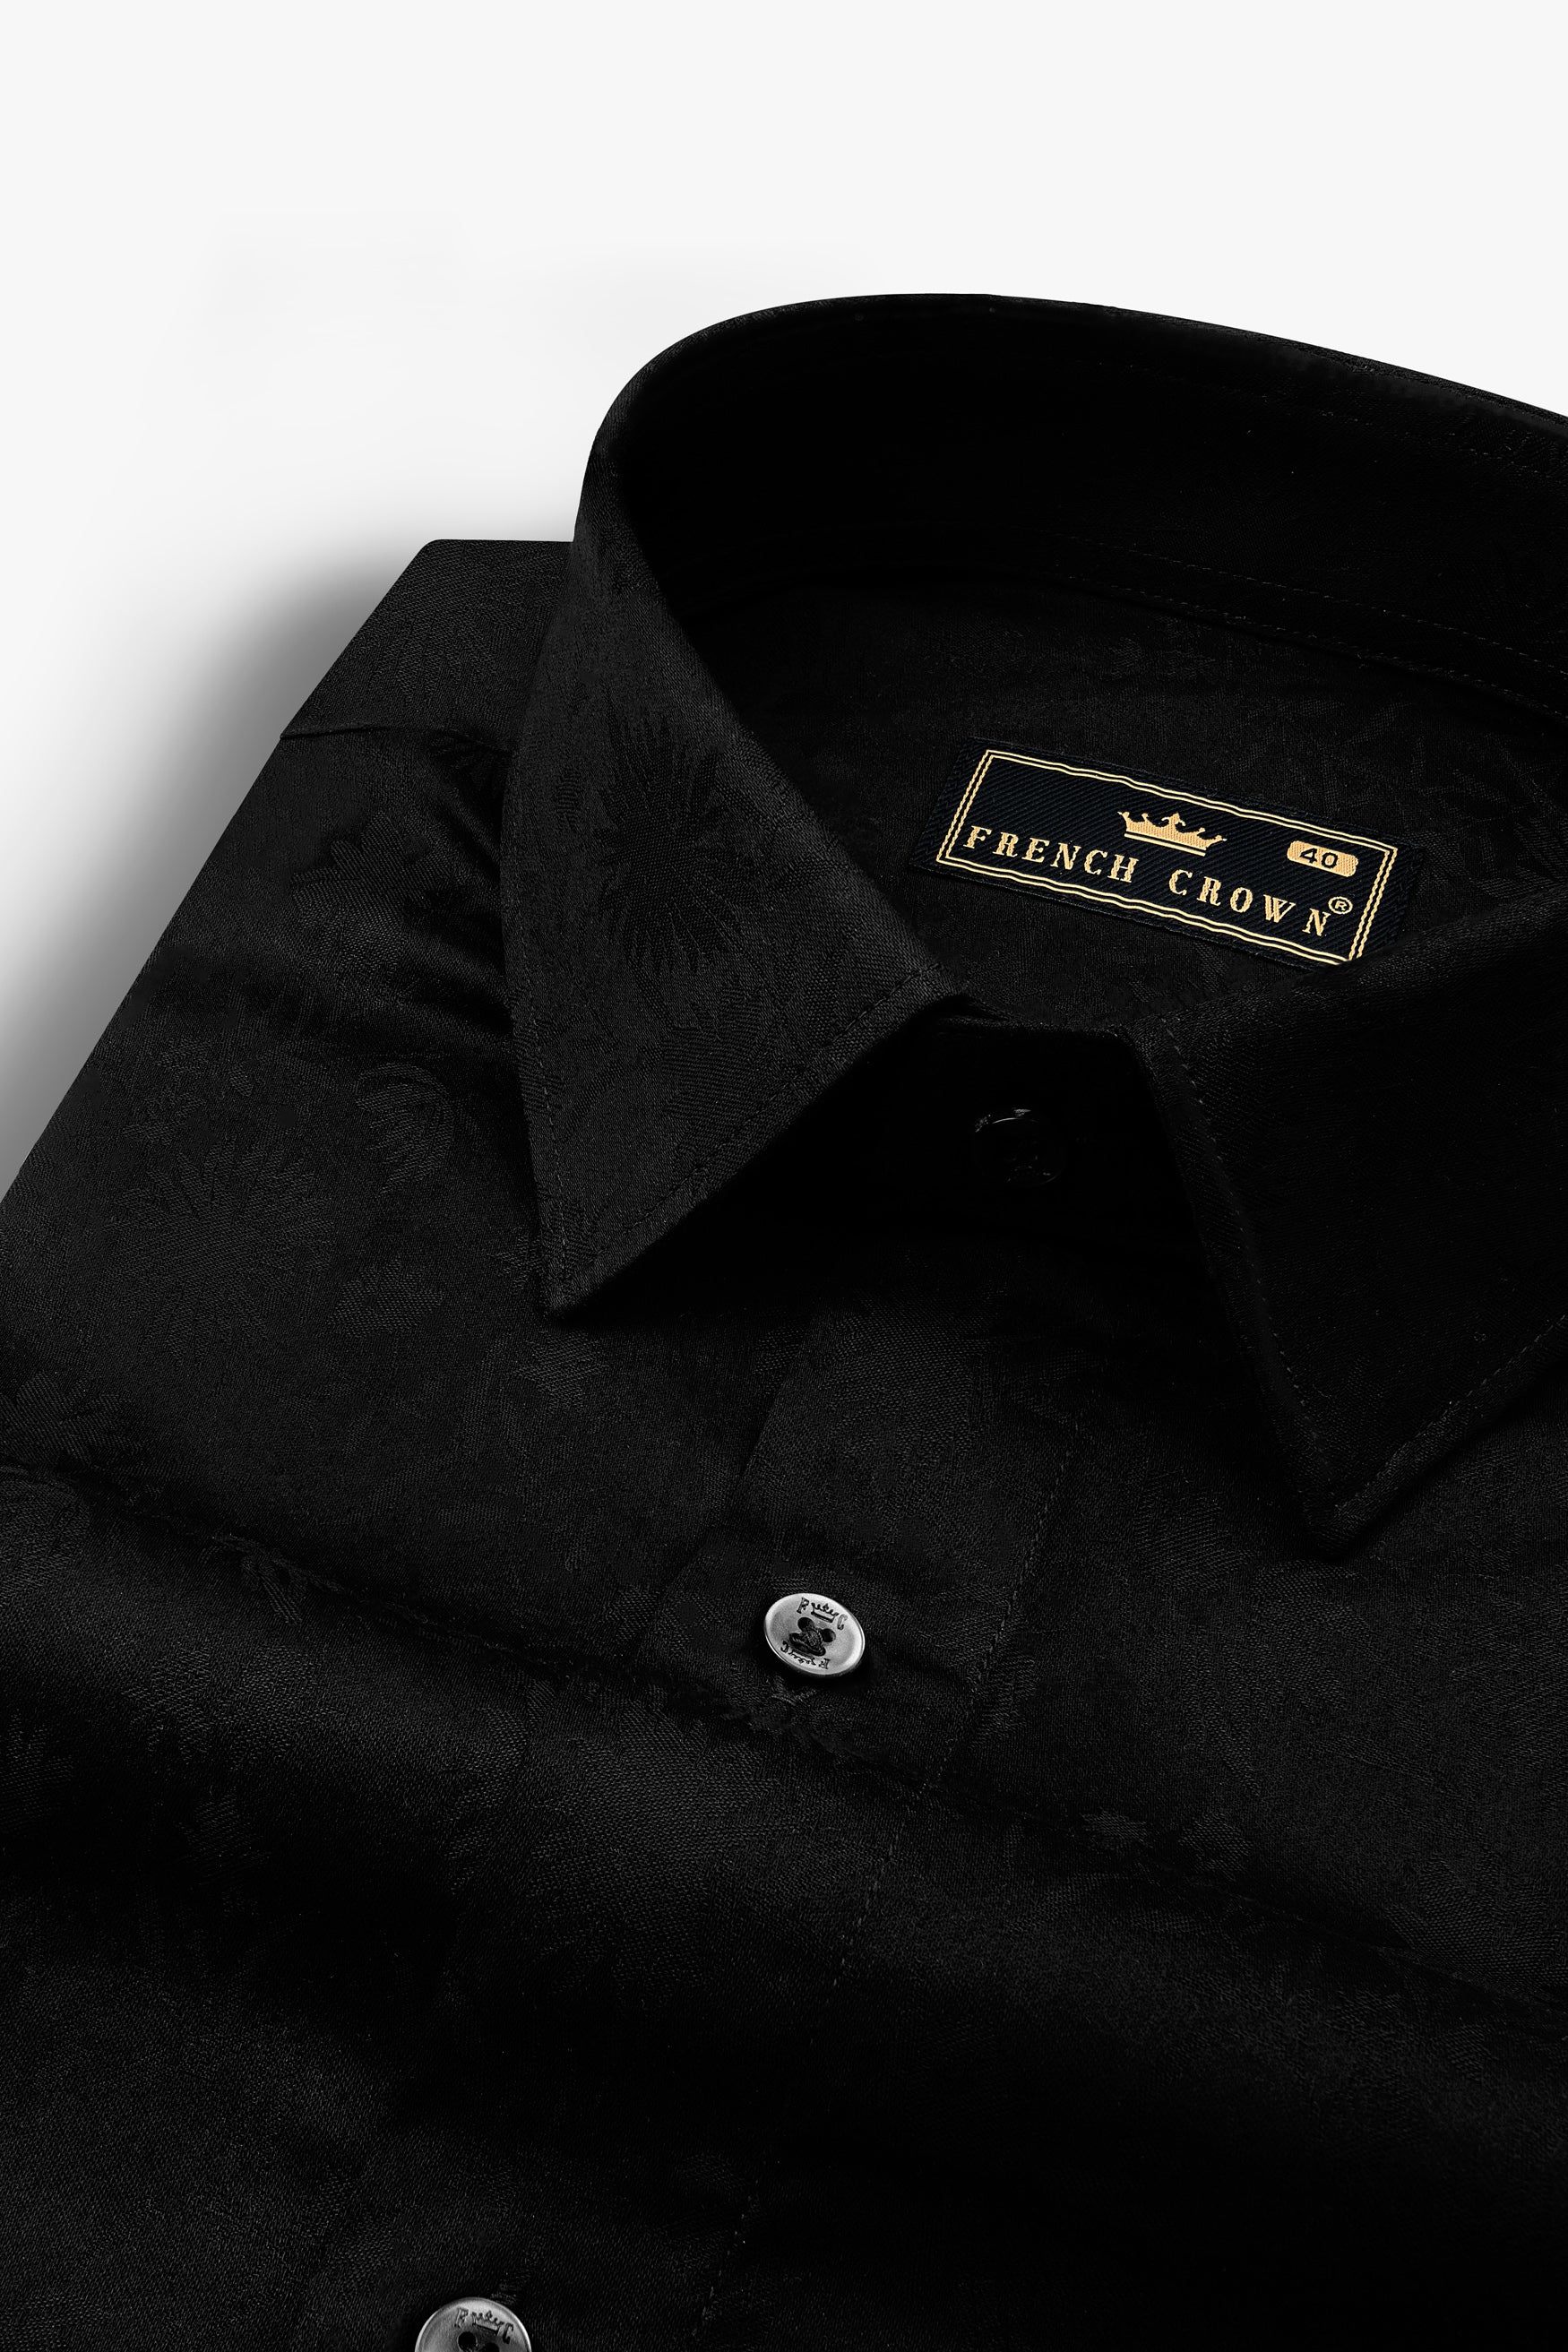 Jade Black Jacquard Textured Premium Giza Cotton Shirt